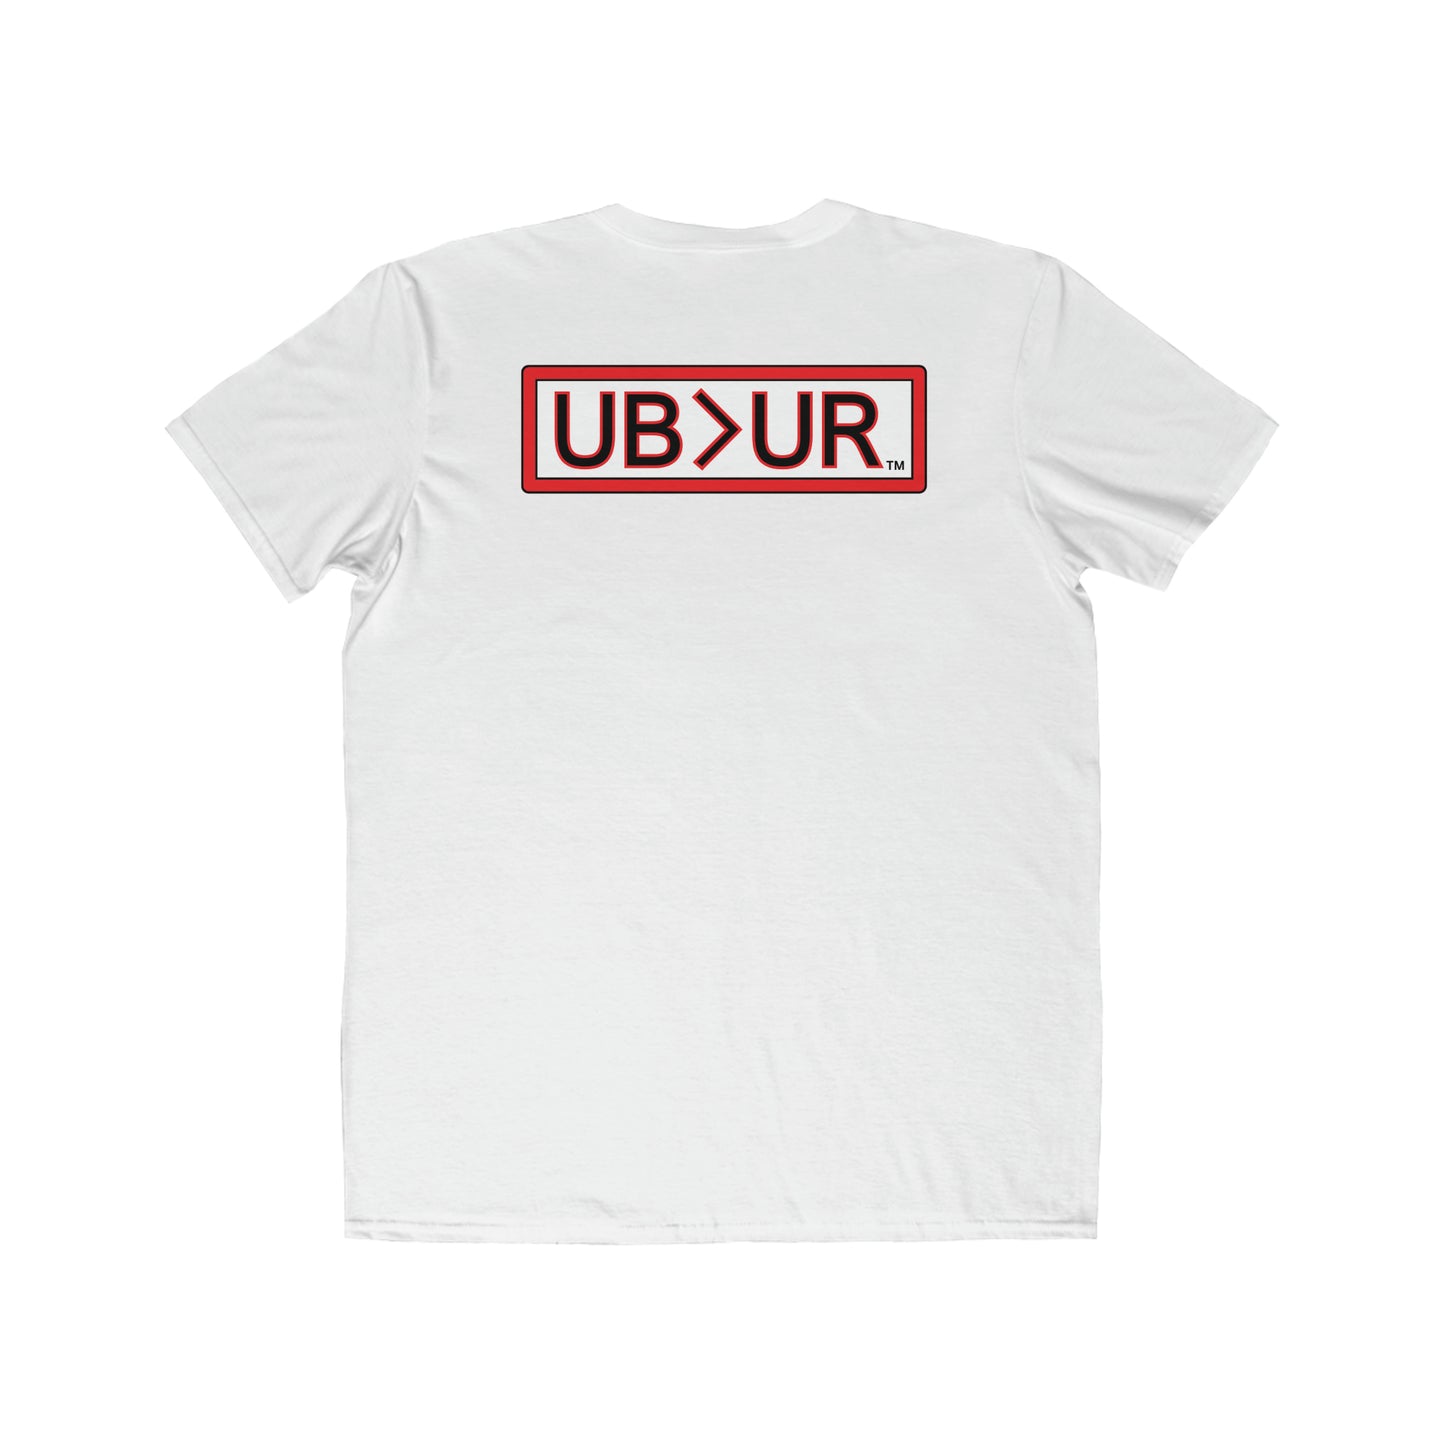 Men's Improving T-shirt with UB>UR logo in the back